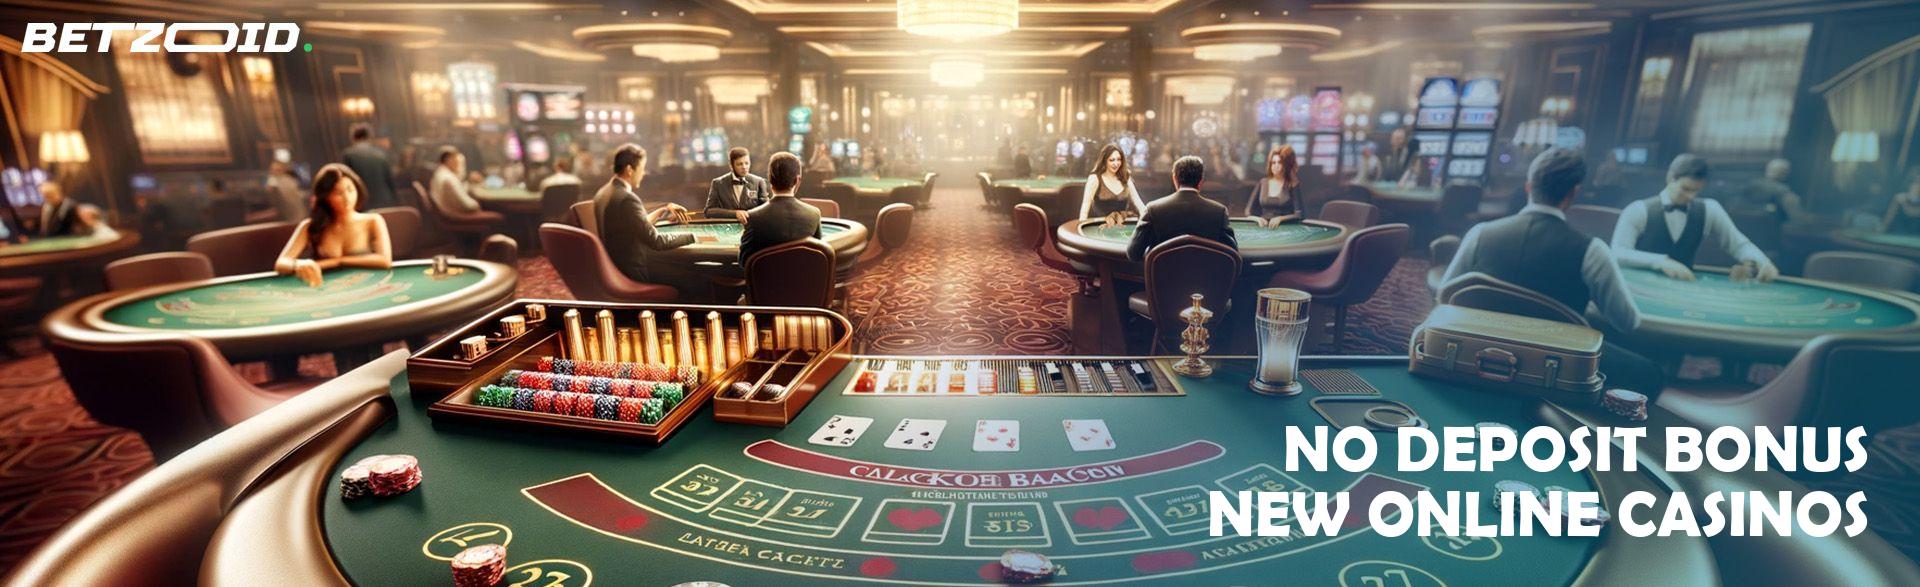 No Deposit Bonus New Online Casinos.